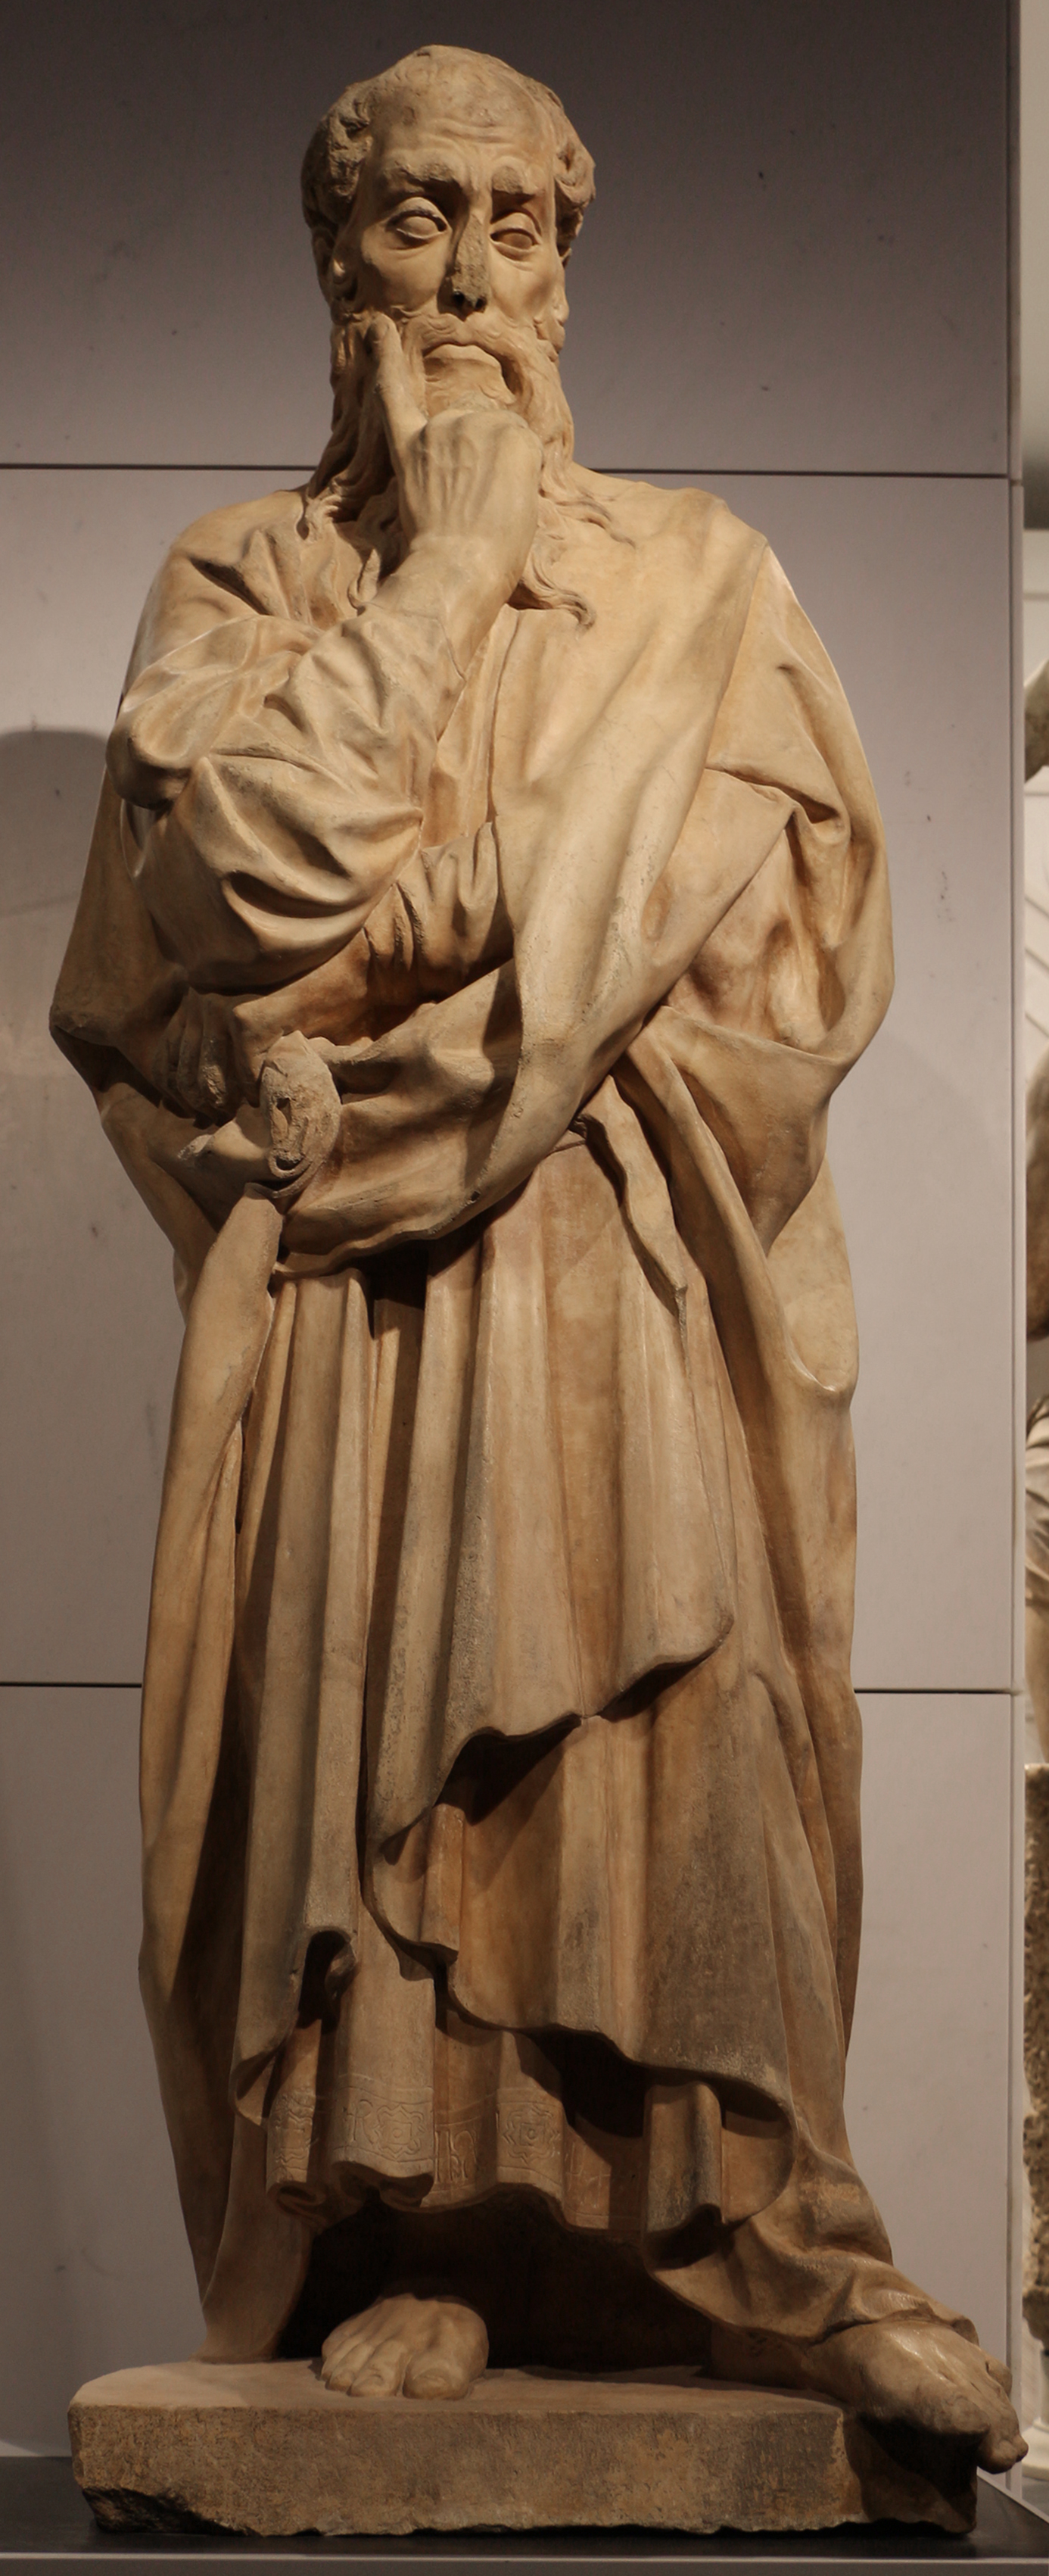 File:Donatello, profeta pensieroso 01.JPG - Wikimedia Commons